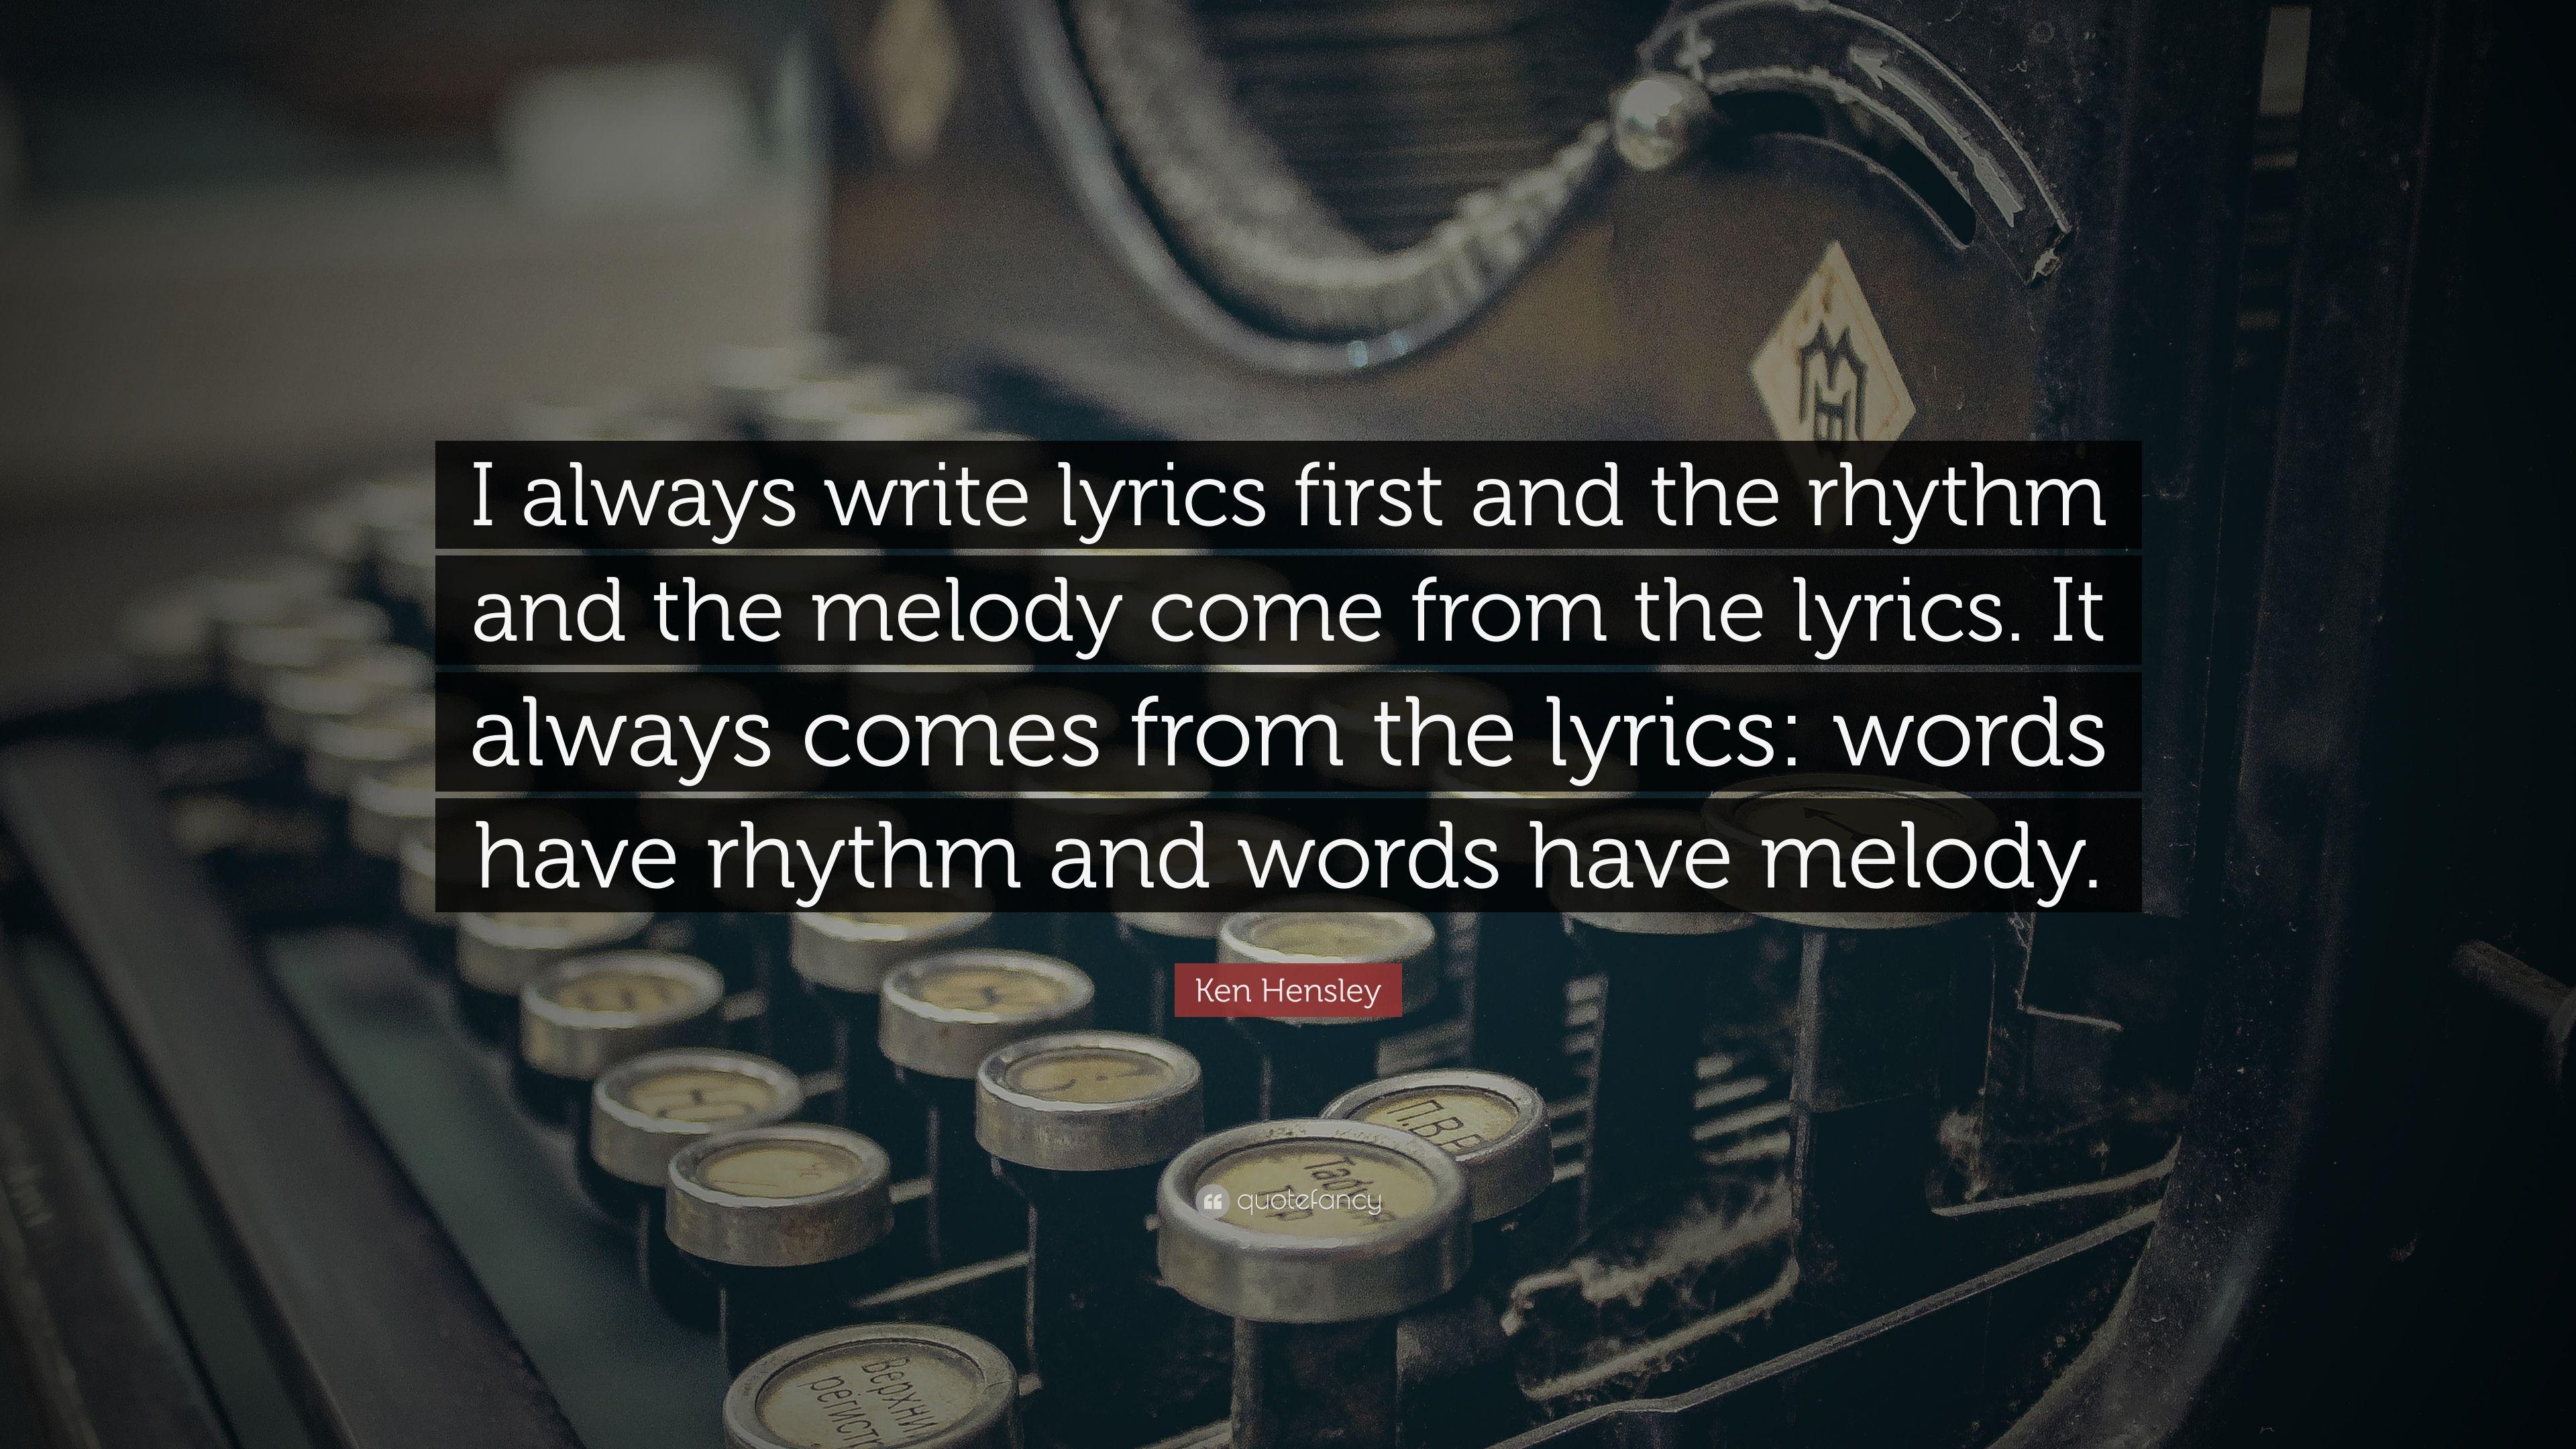 Ken Hensley Quote: “I always write lyrics first and the rhythm